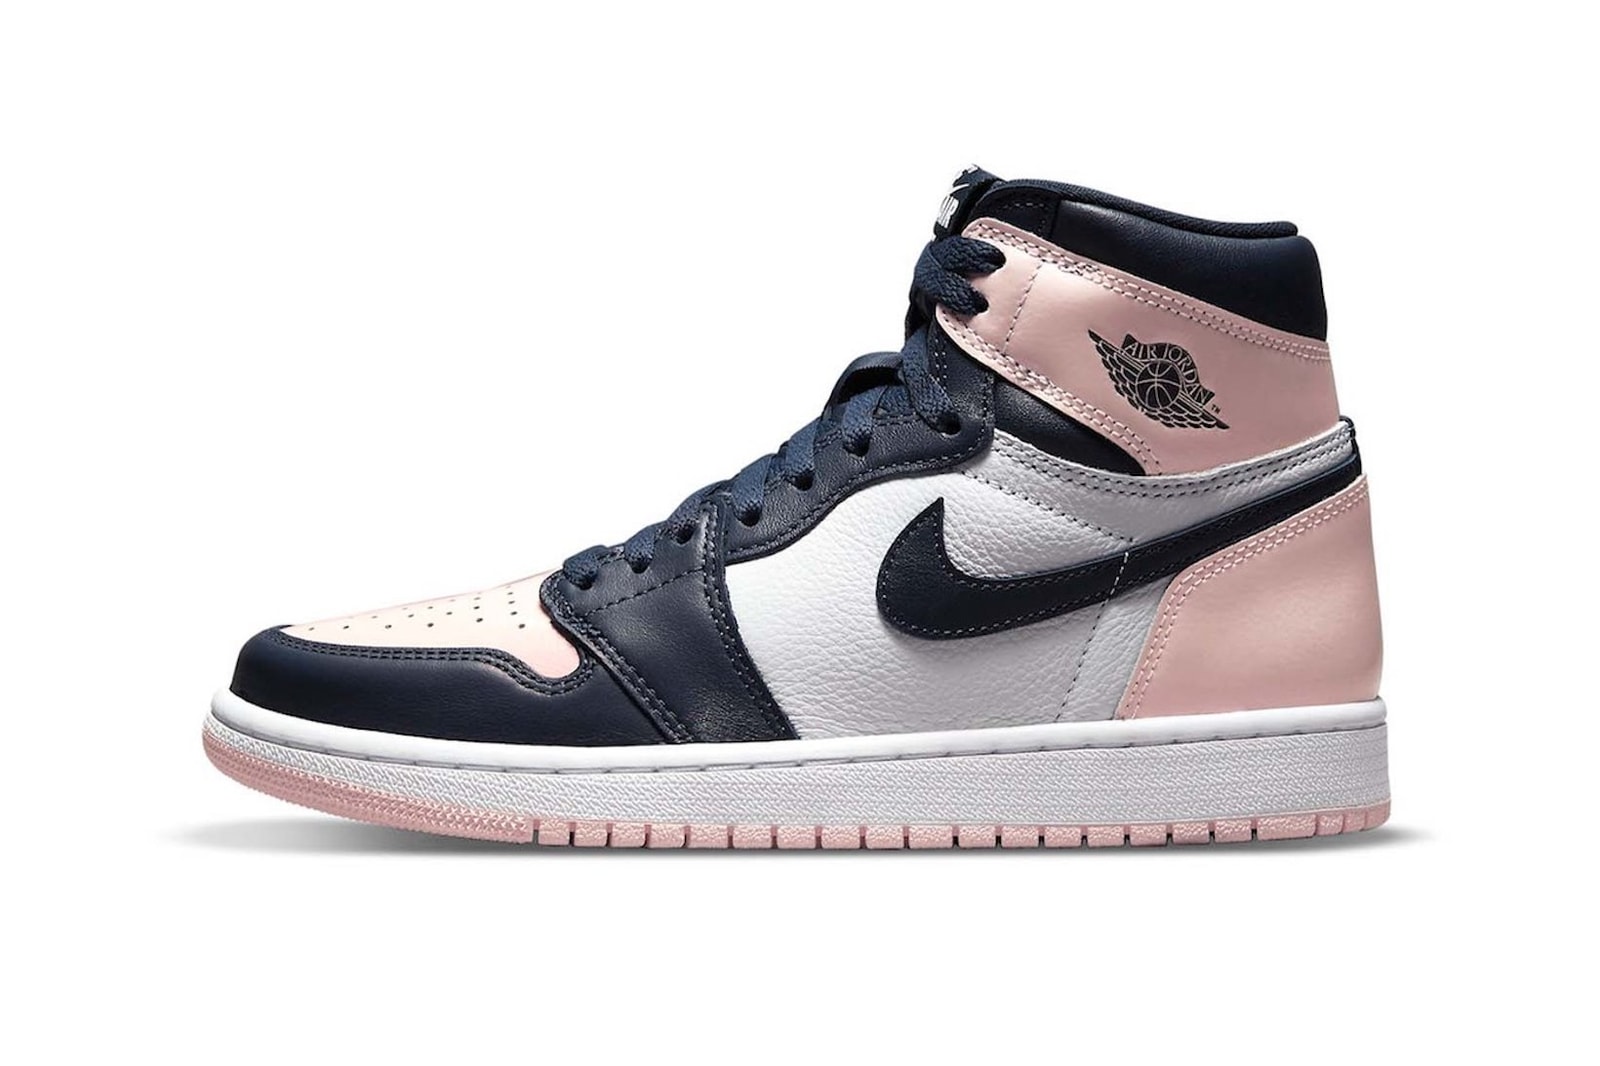 Air Jordan 1 High Bred Patent Bubblegum Black Red White Pink Sneakers Footwear Shoes Kicks Sneakerhead